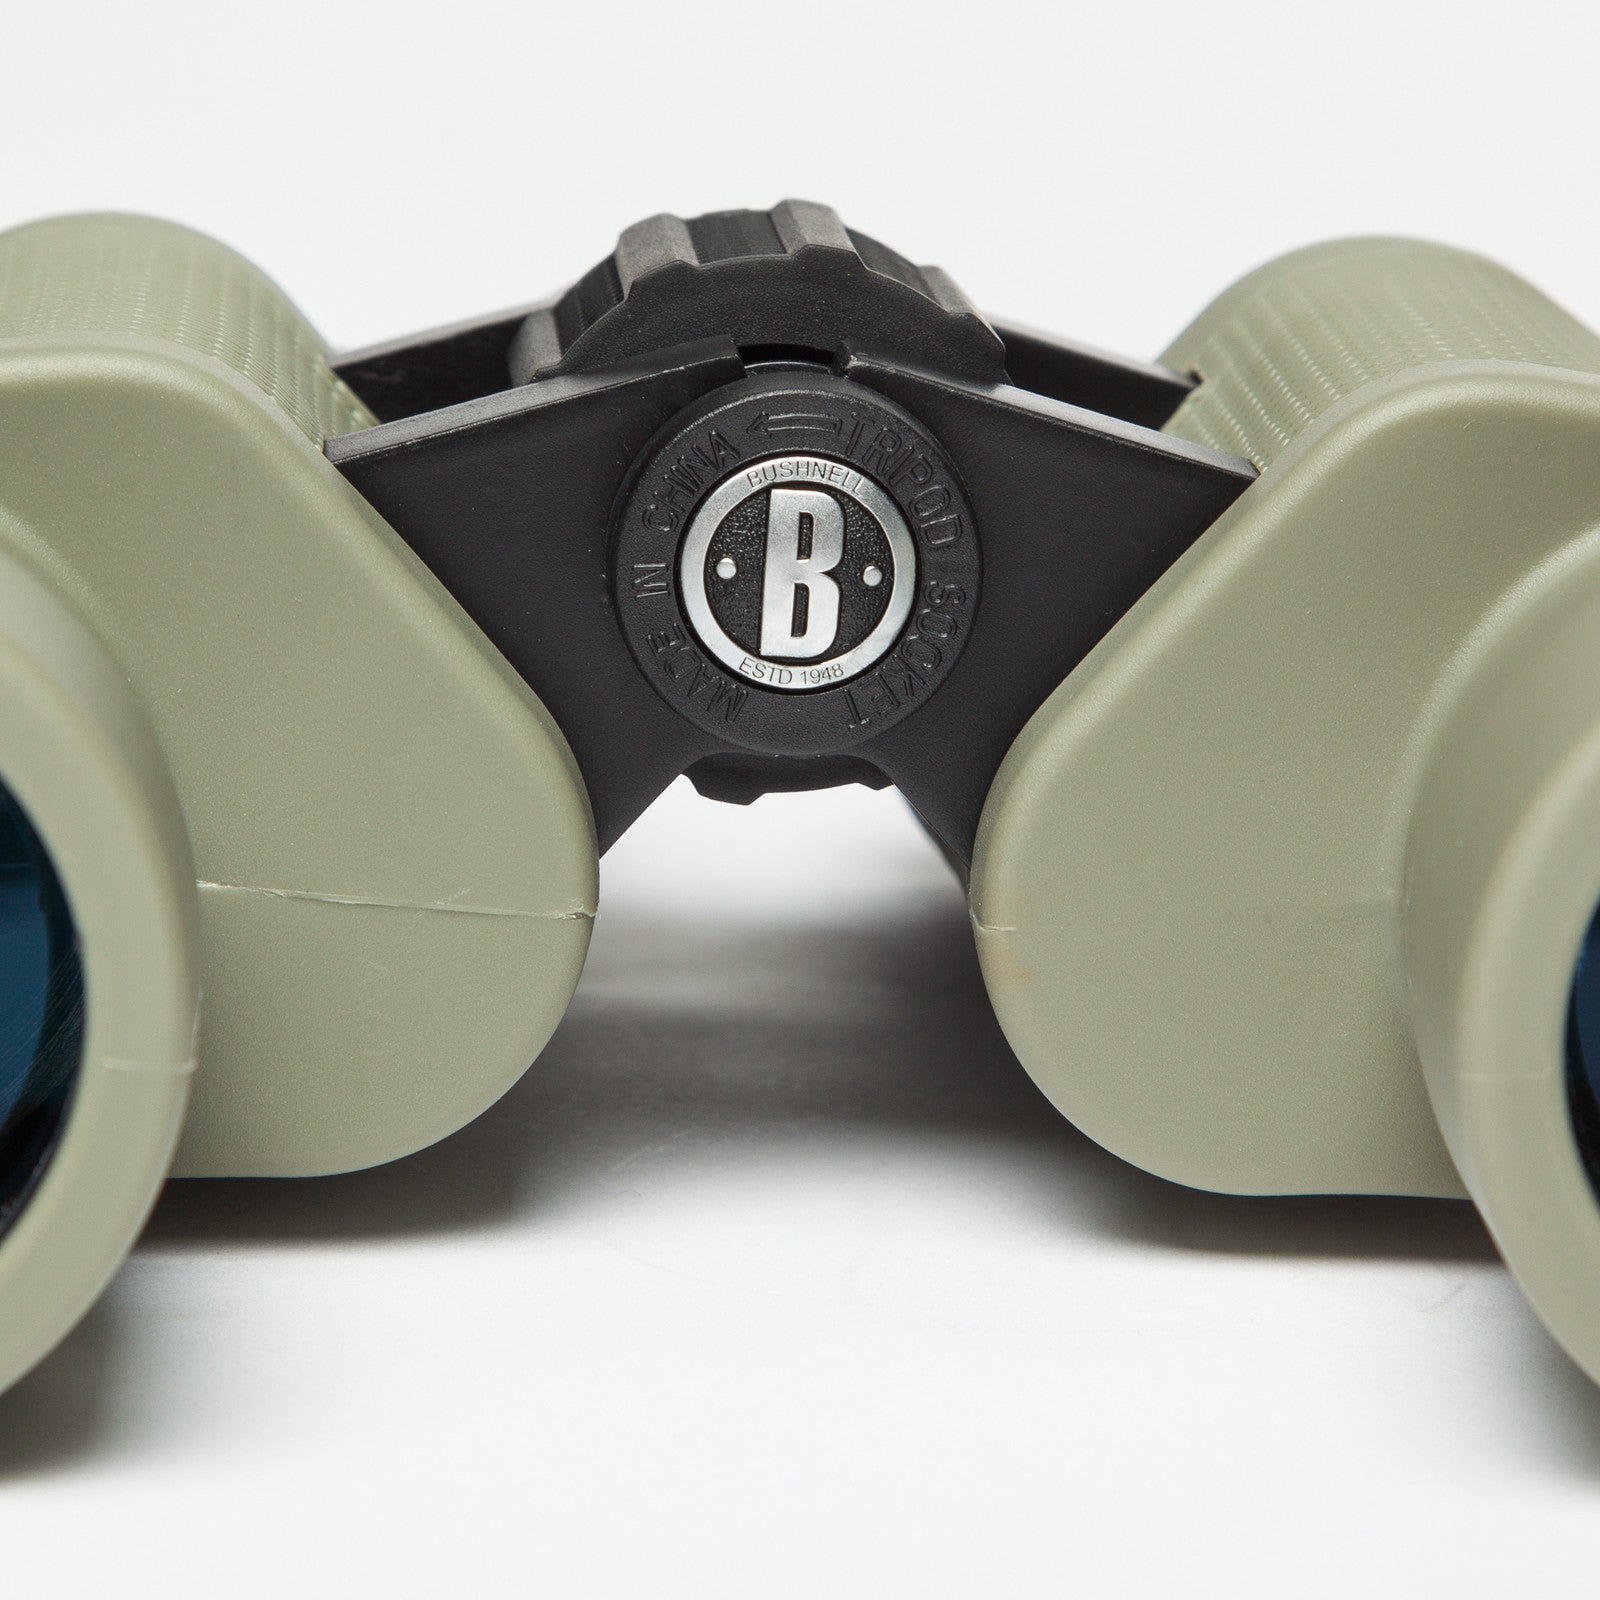 Natureview 8x40 Backyard Birder - Binoculars at Binoculars